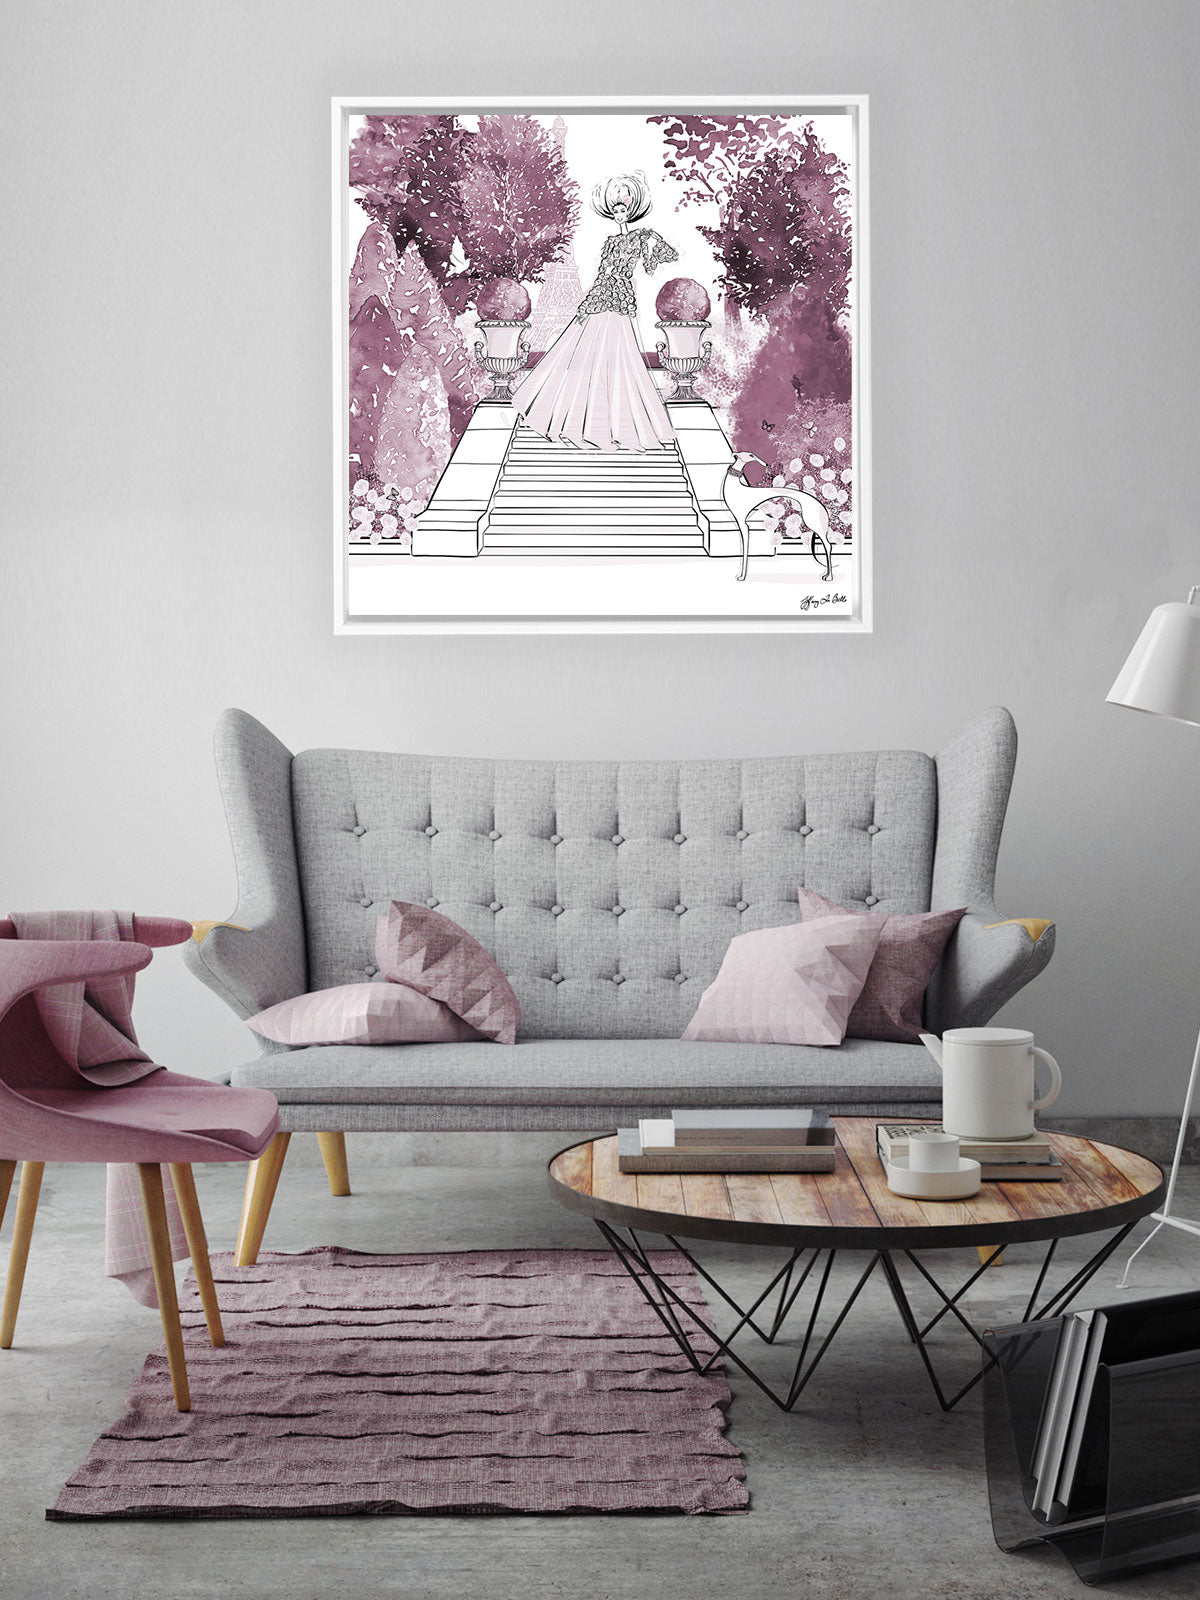 Parisienne Mulberry Garden - Illustration - Canvas Gallery Print - Unframed or Framed - Tiffany La Belle